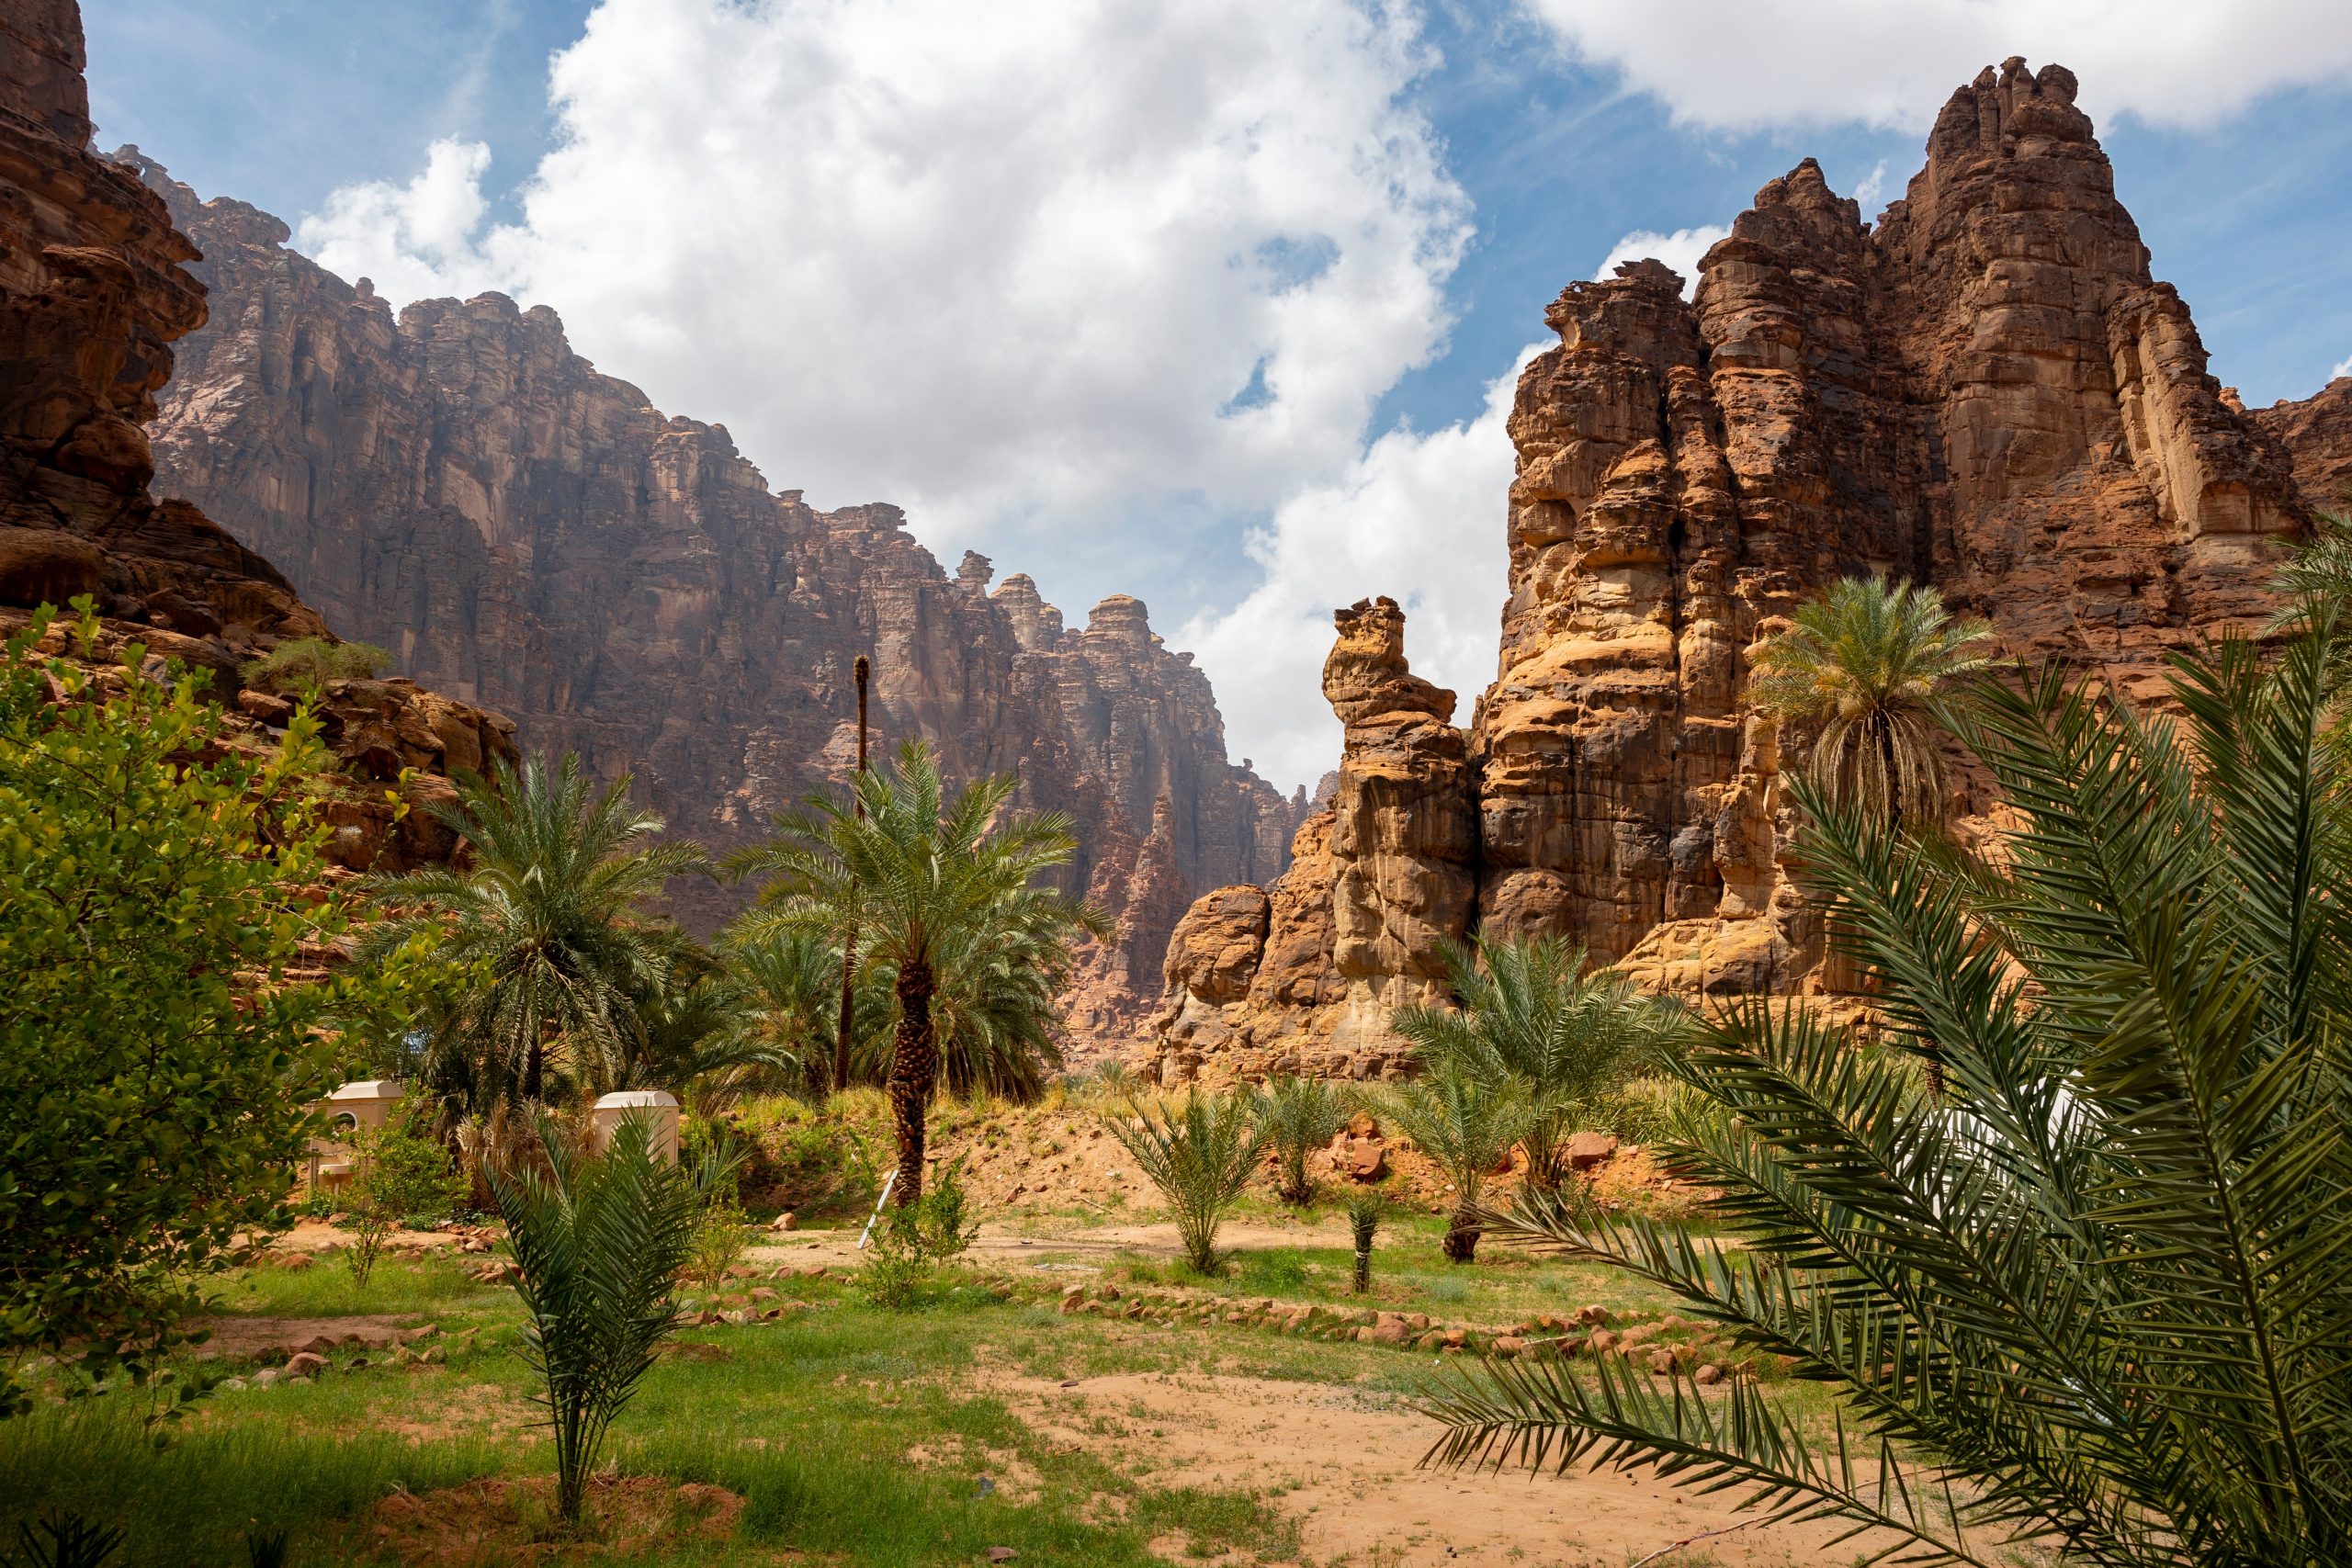 Wadi Al Disah Valley views in Tabuk Region of Western